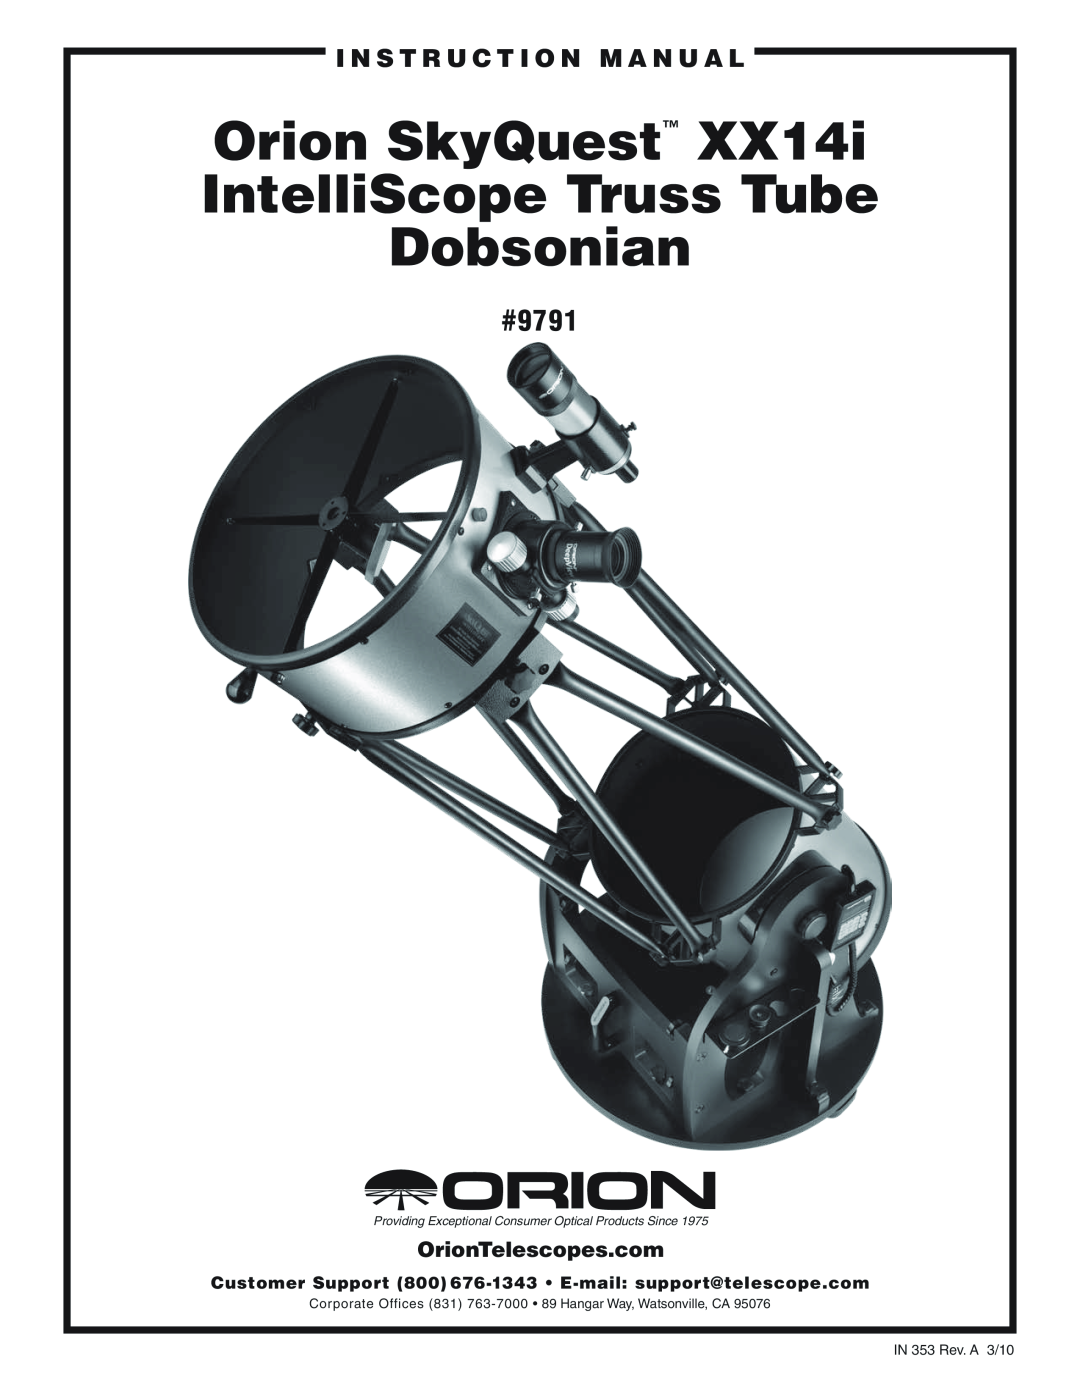 Orion instruction manual #9791, i n s t r u c t i o n M a n u a l, Orion SkyQuest IntelliScope Truss Tube Dobsonian 